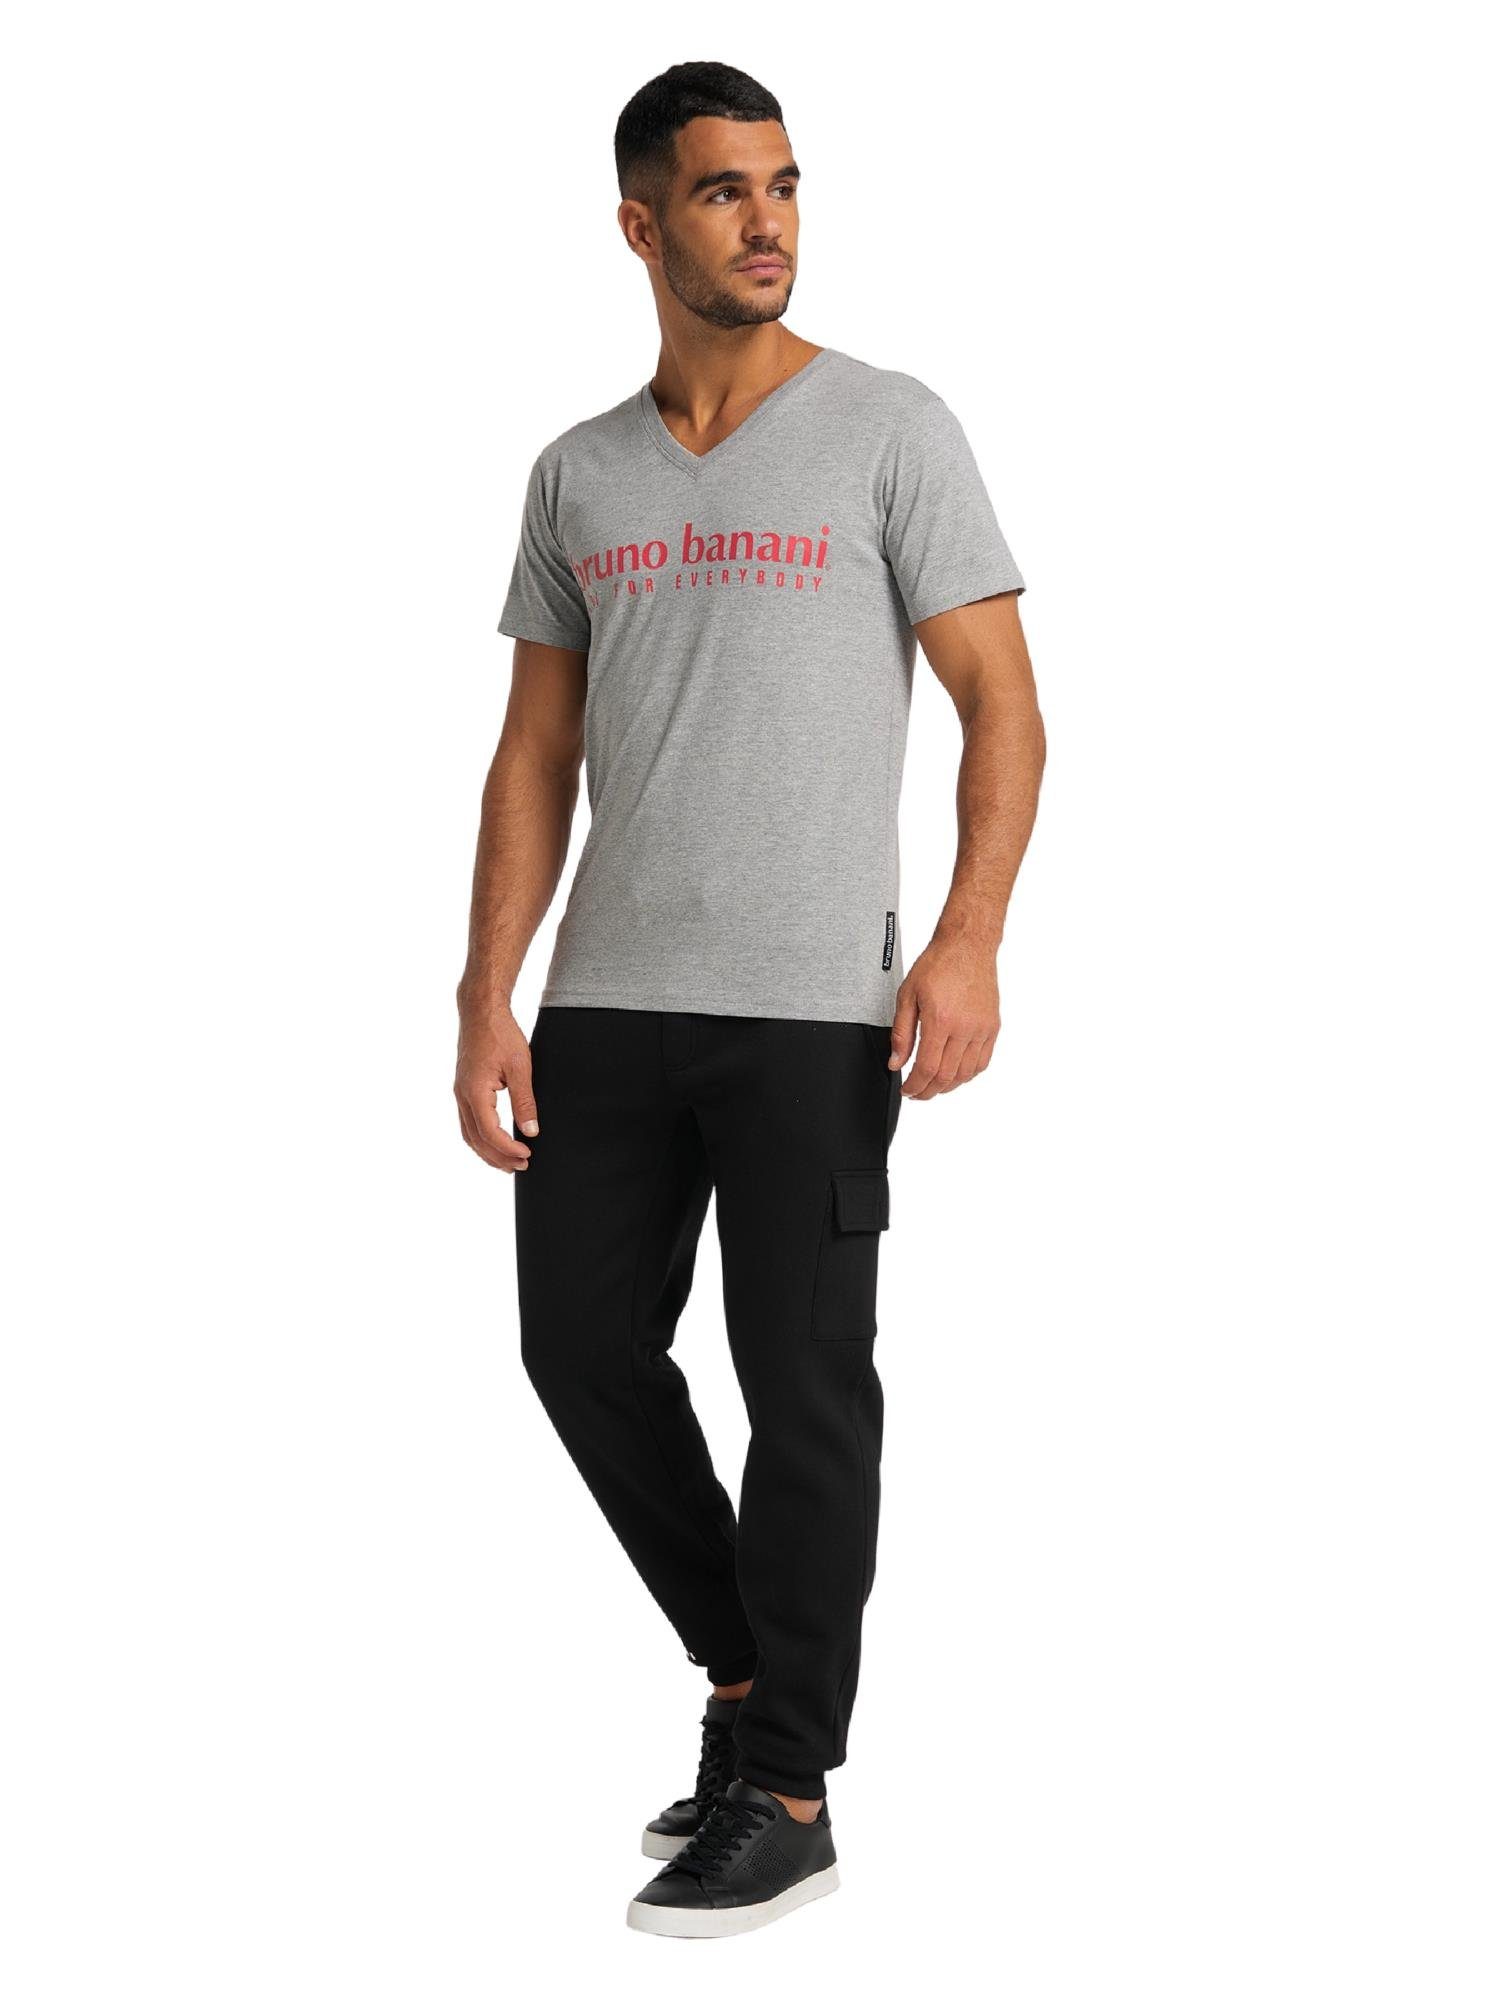 PHILLIPS Banani Grau Melange Bruno T-Shirt /